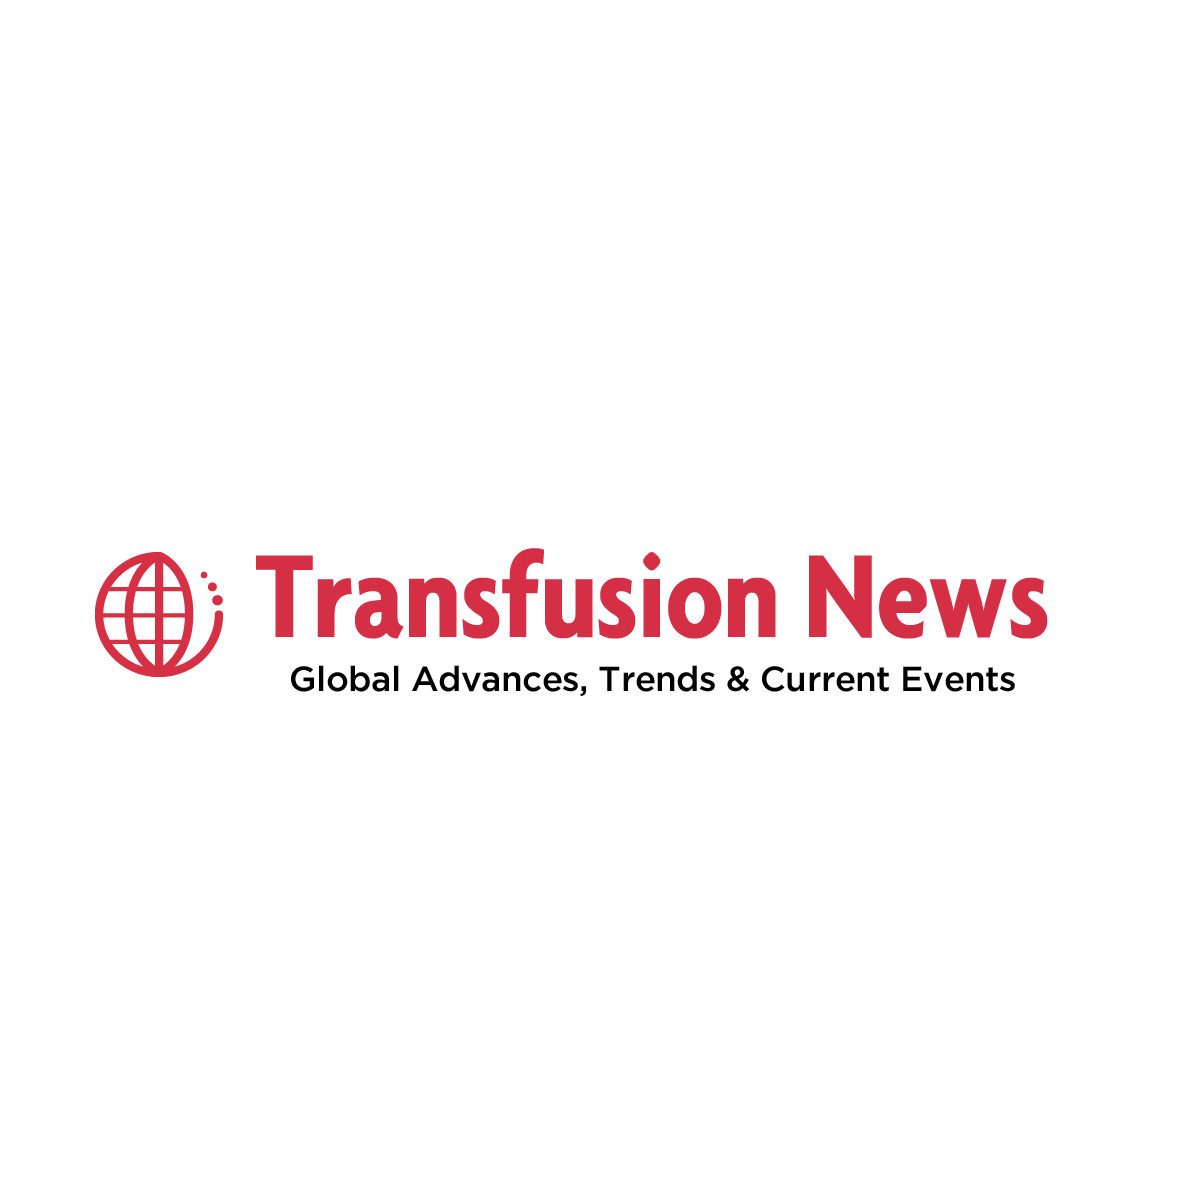 (c) Transfusionnews.com